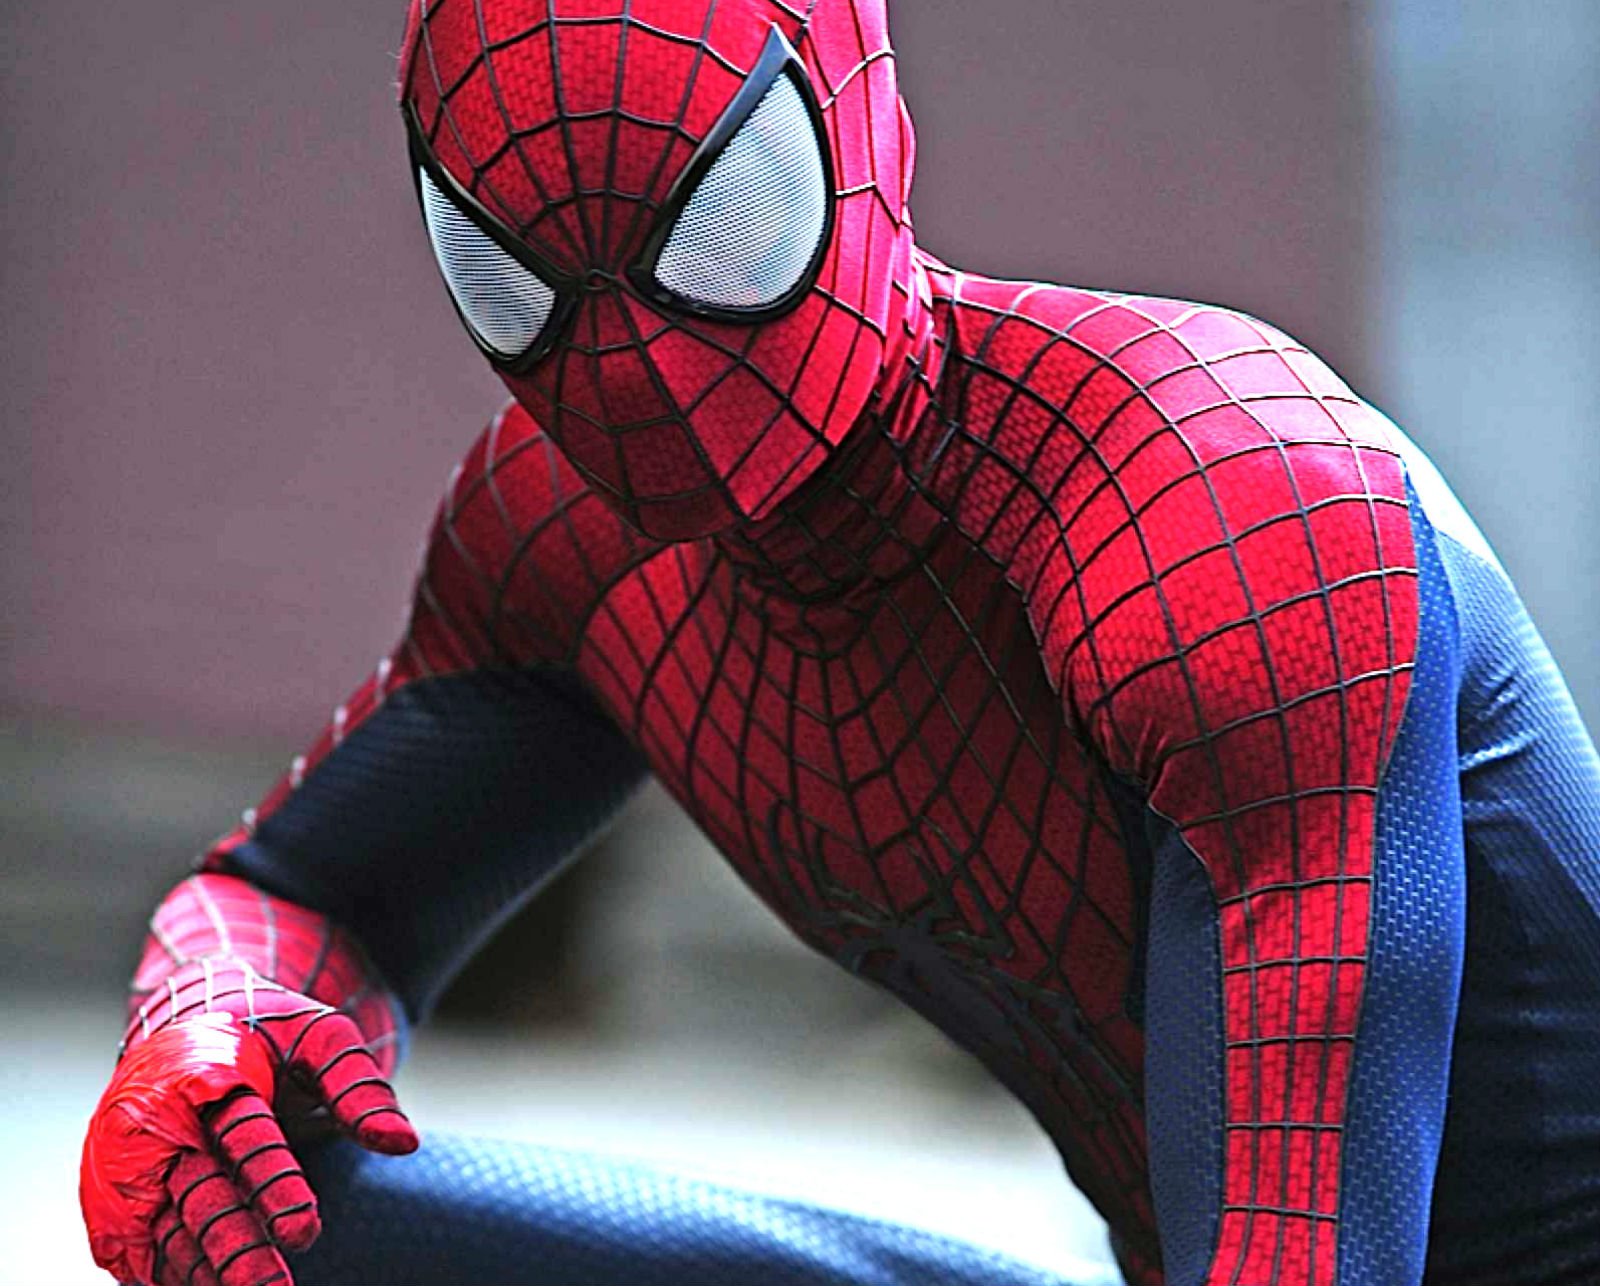 amazing, Spider man, 2, Action, Adventure, Fantasy, Comics, Movie, Spider, Spiderman, Marvel, Superhero Wallpaper